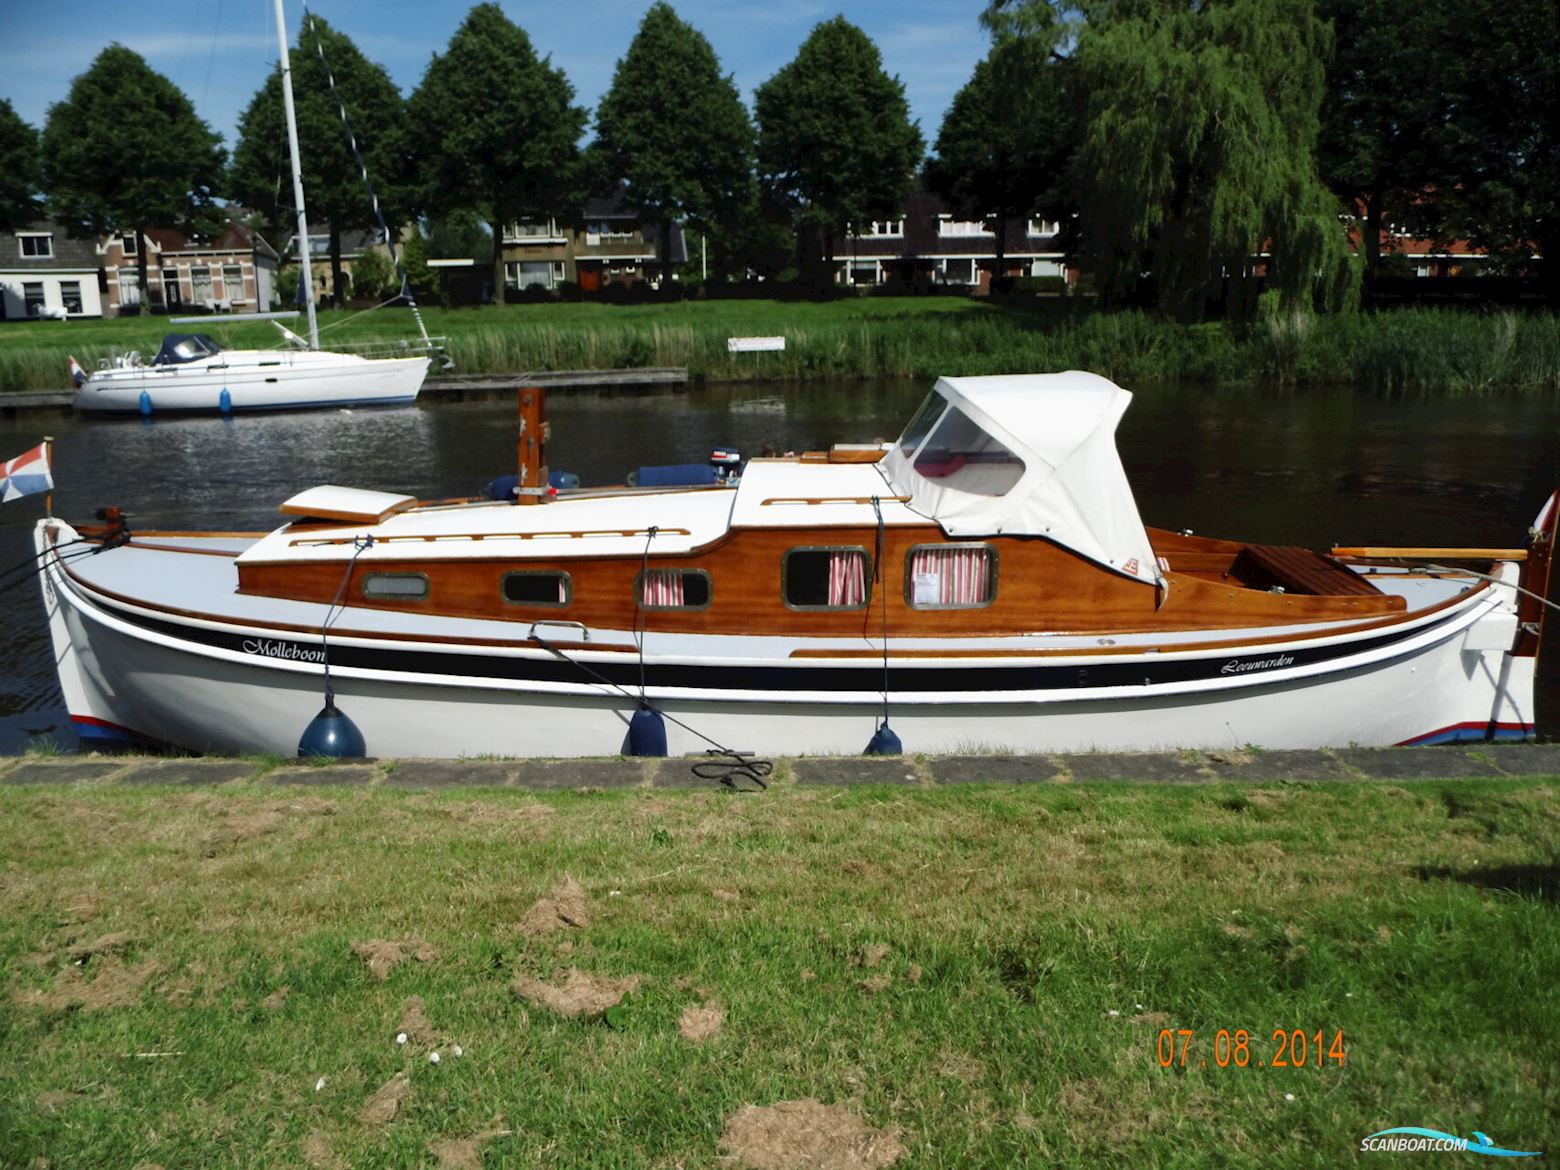 Zeilsloep 8.5 Sailing boat 1951, with Sole 25 pk engine, The Netherlands